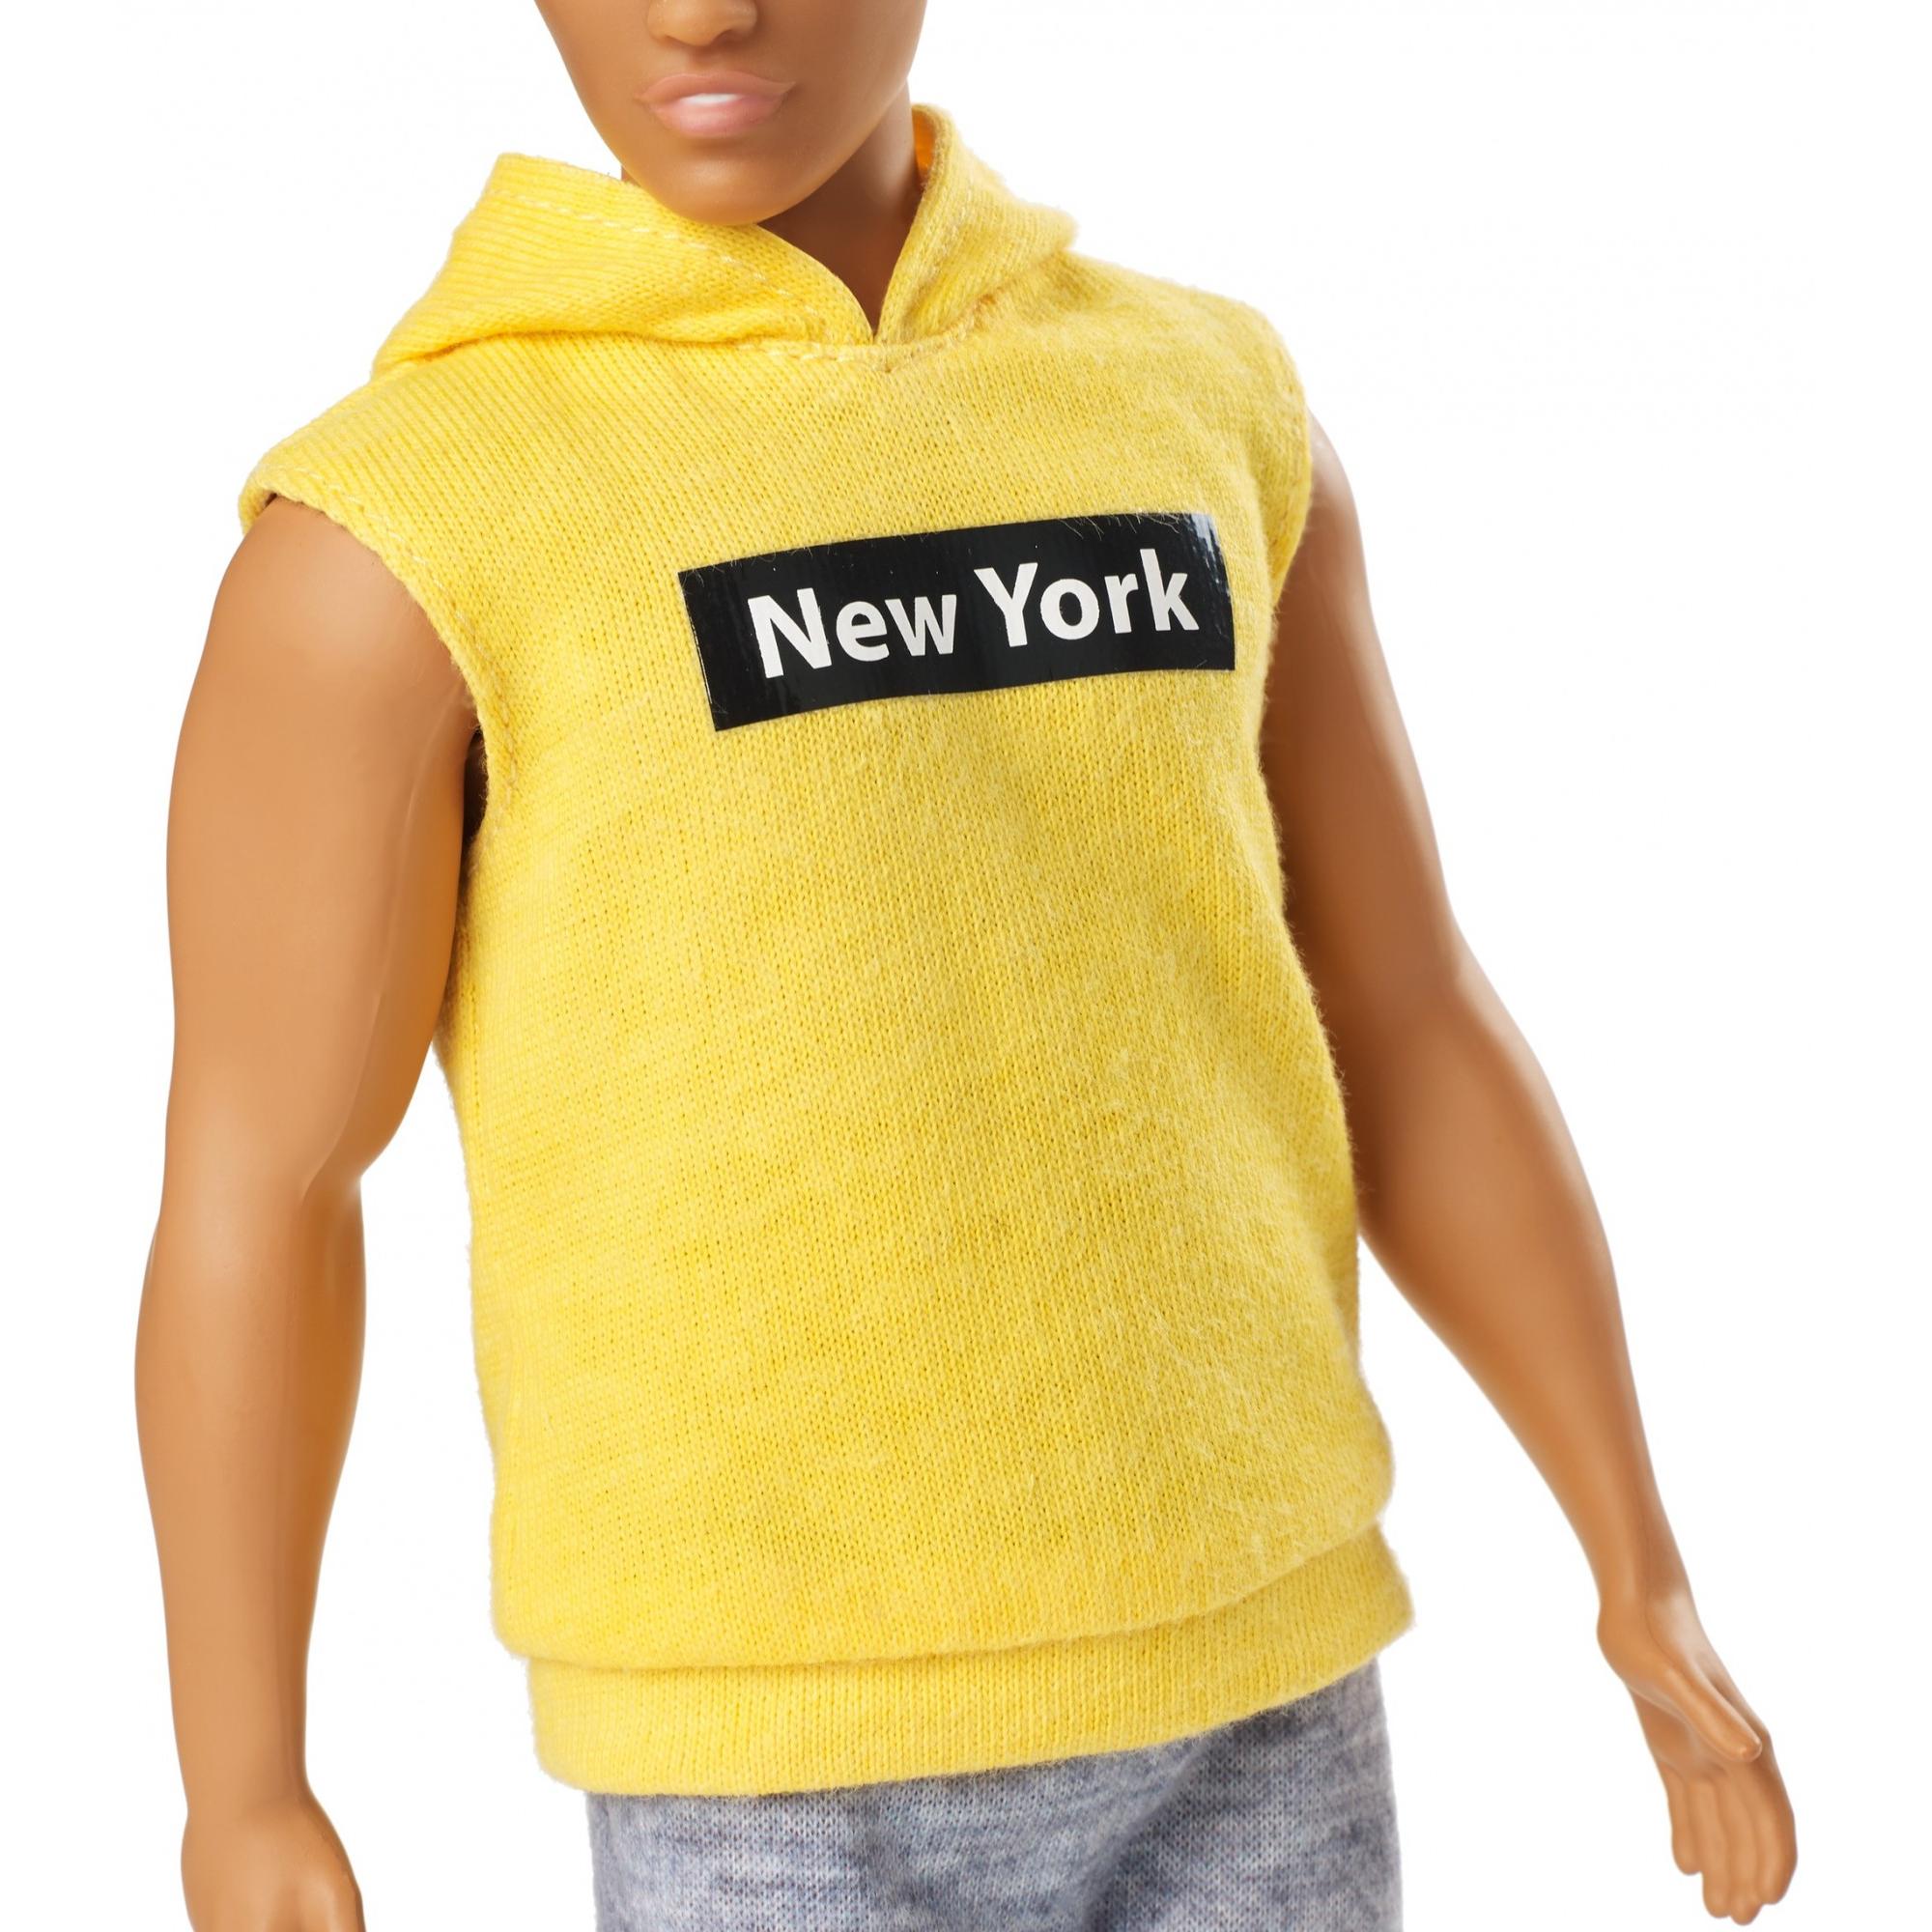 Barbie Ken Fashionistas Doll Wearing Yellow "New York" Hoodie - image 4 of 6